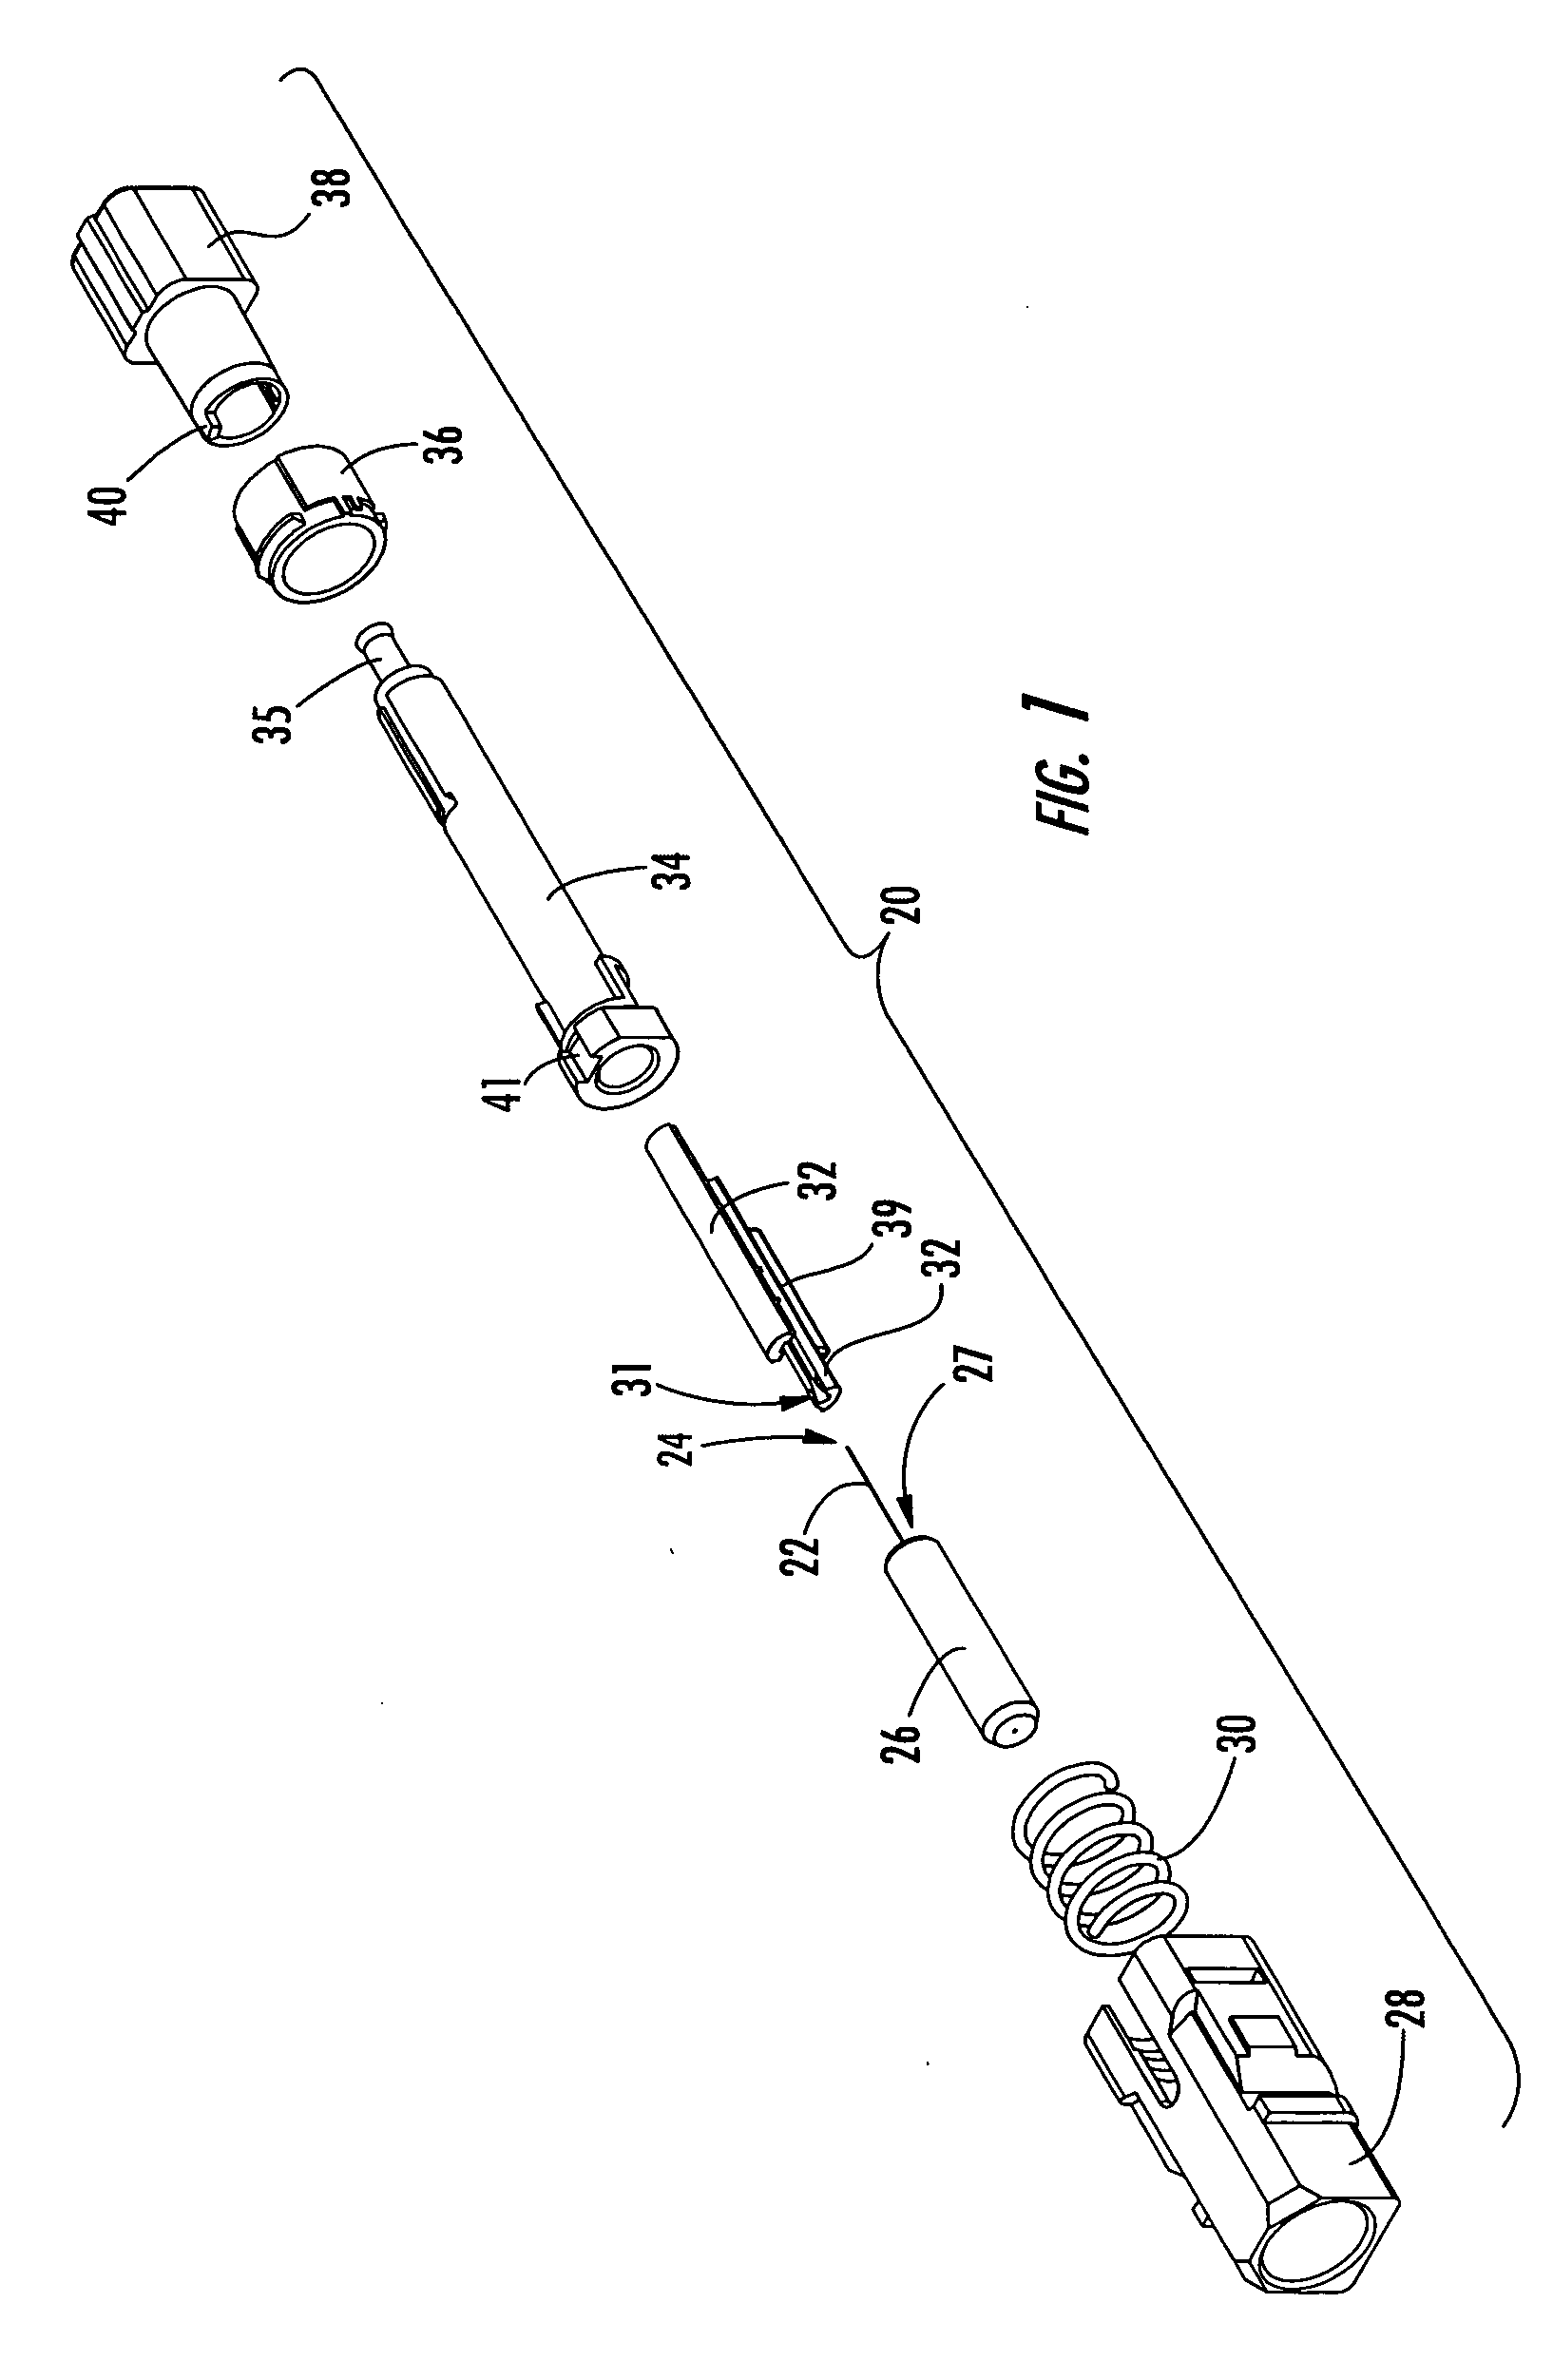 Field-installable connector including stub optical fiber having laser shaped endface